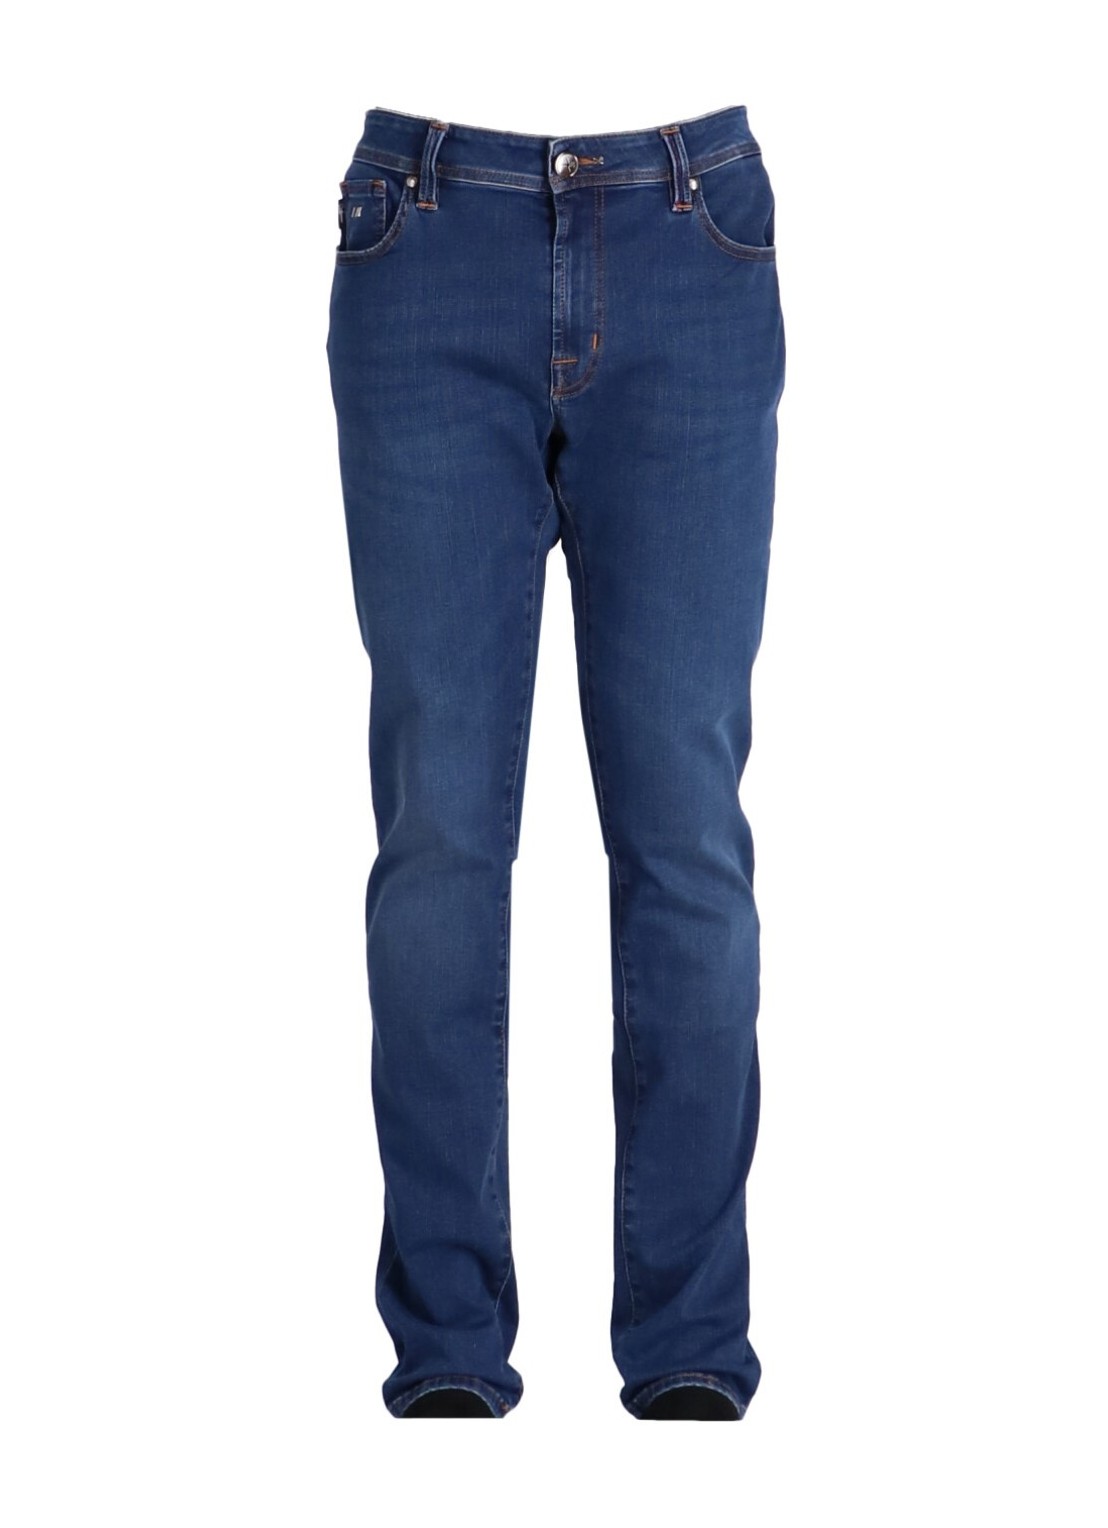 Pantalon jeans tramarossa denim man leonardo zip stre leonardo zip stre 6 months talla 34
 